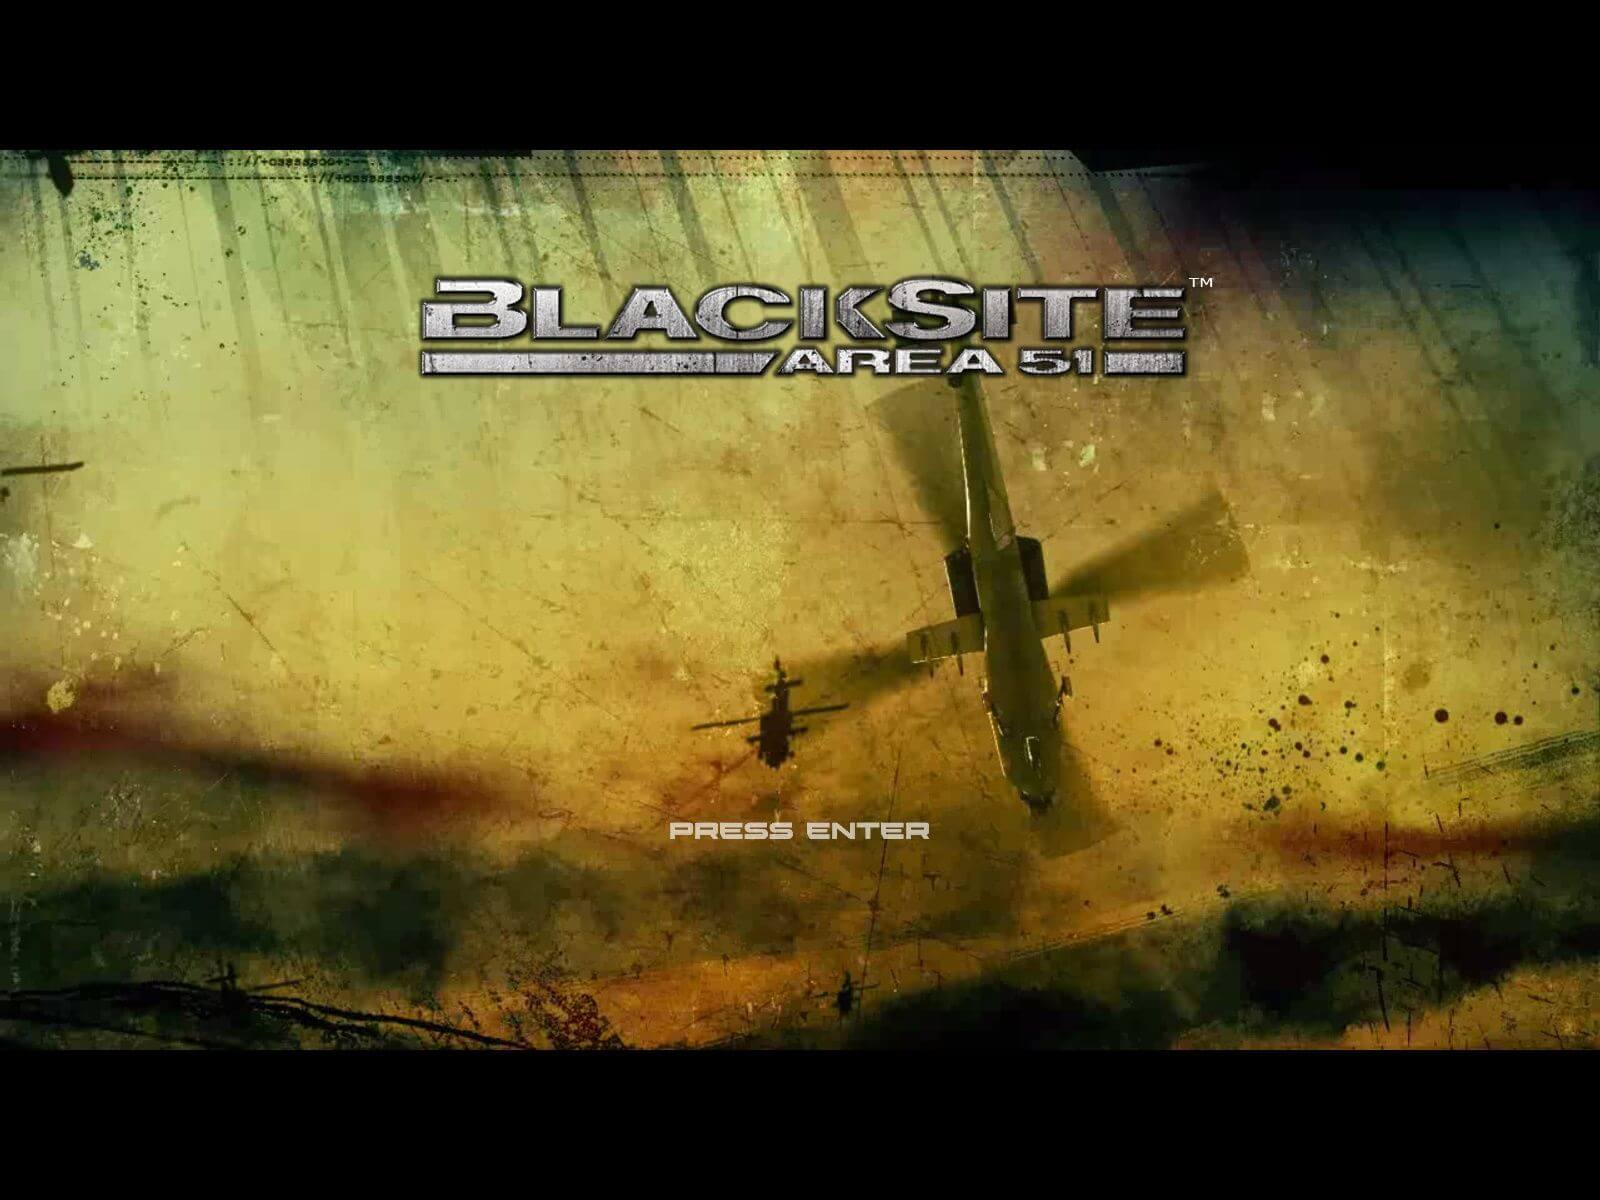 Blacksite Area 51, PC DVD-ROM (2007) w Instruction Booklet